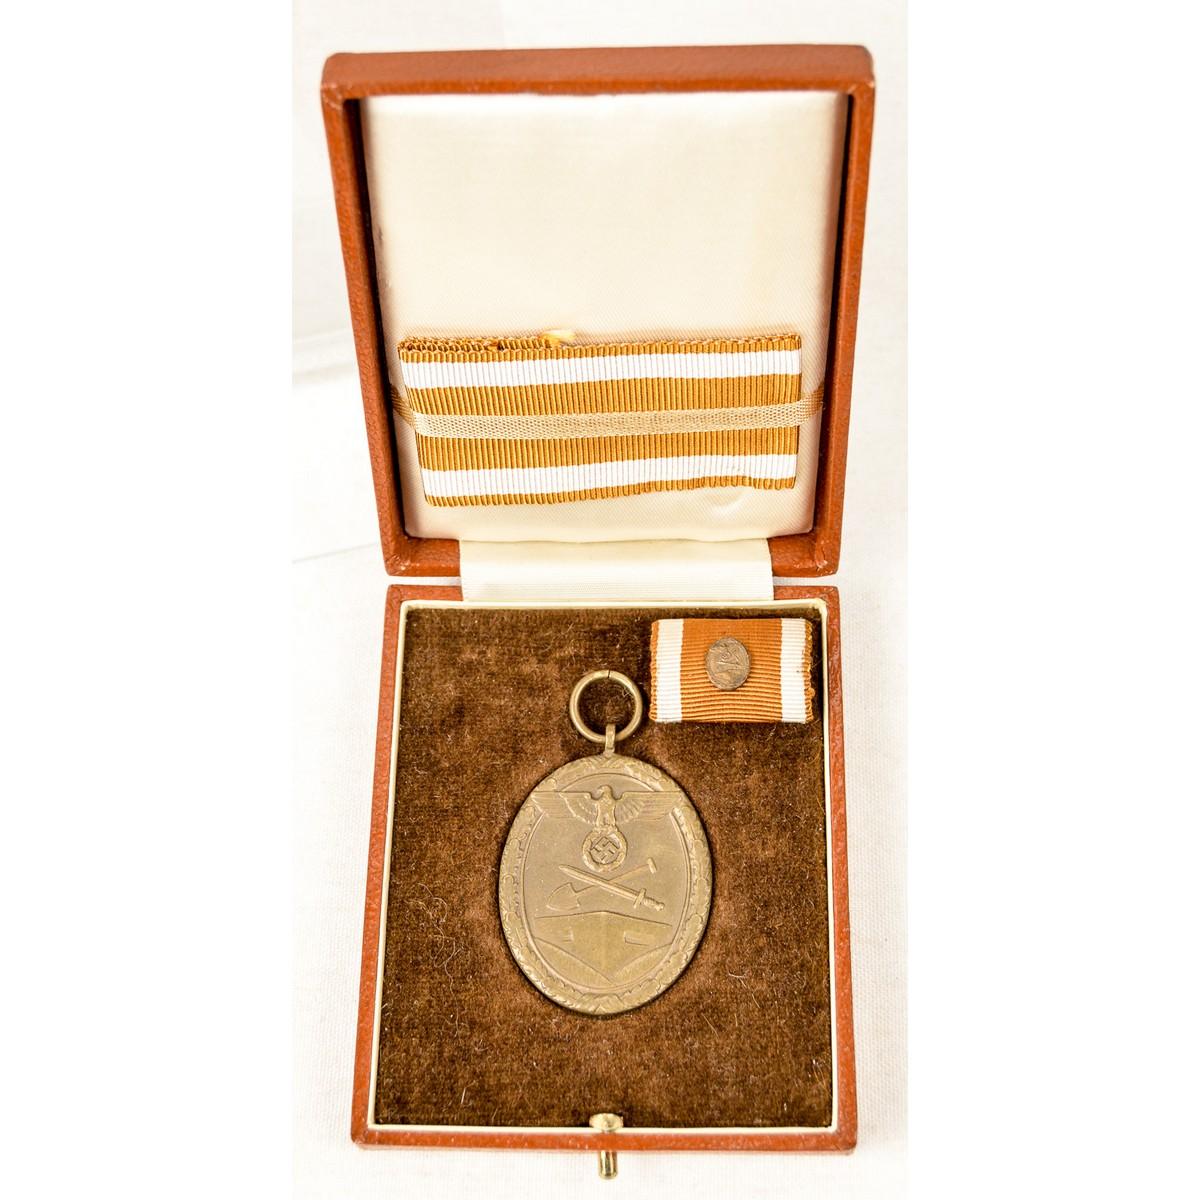 WWII German Cased Medal and Artwork